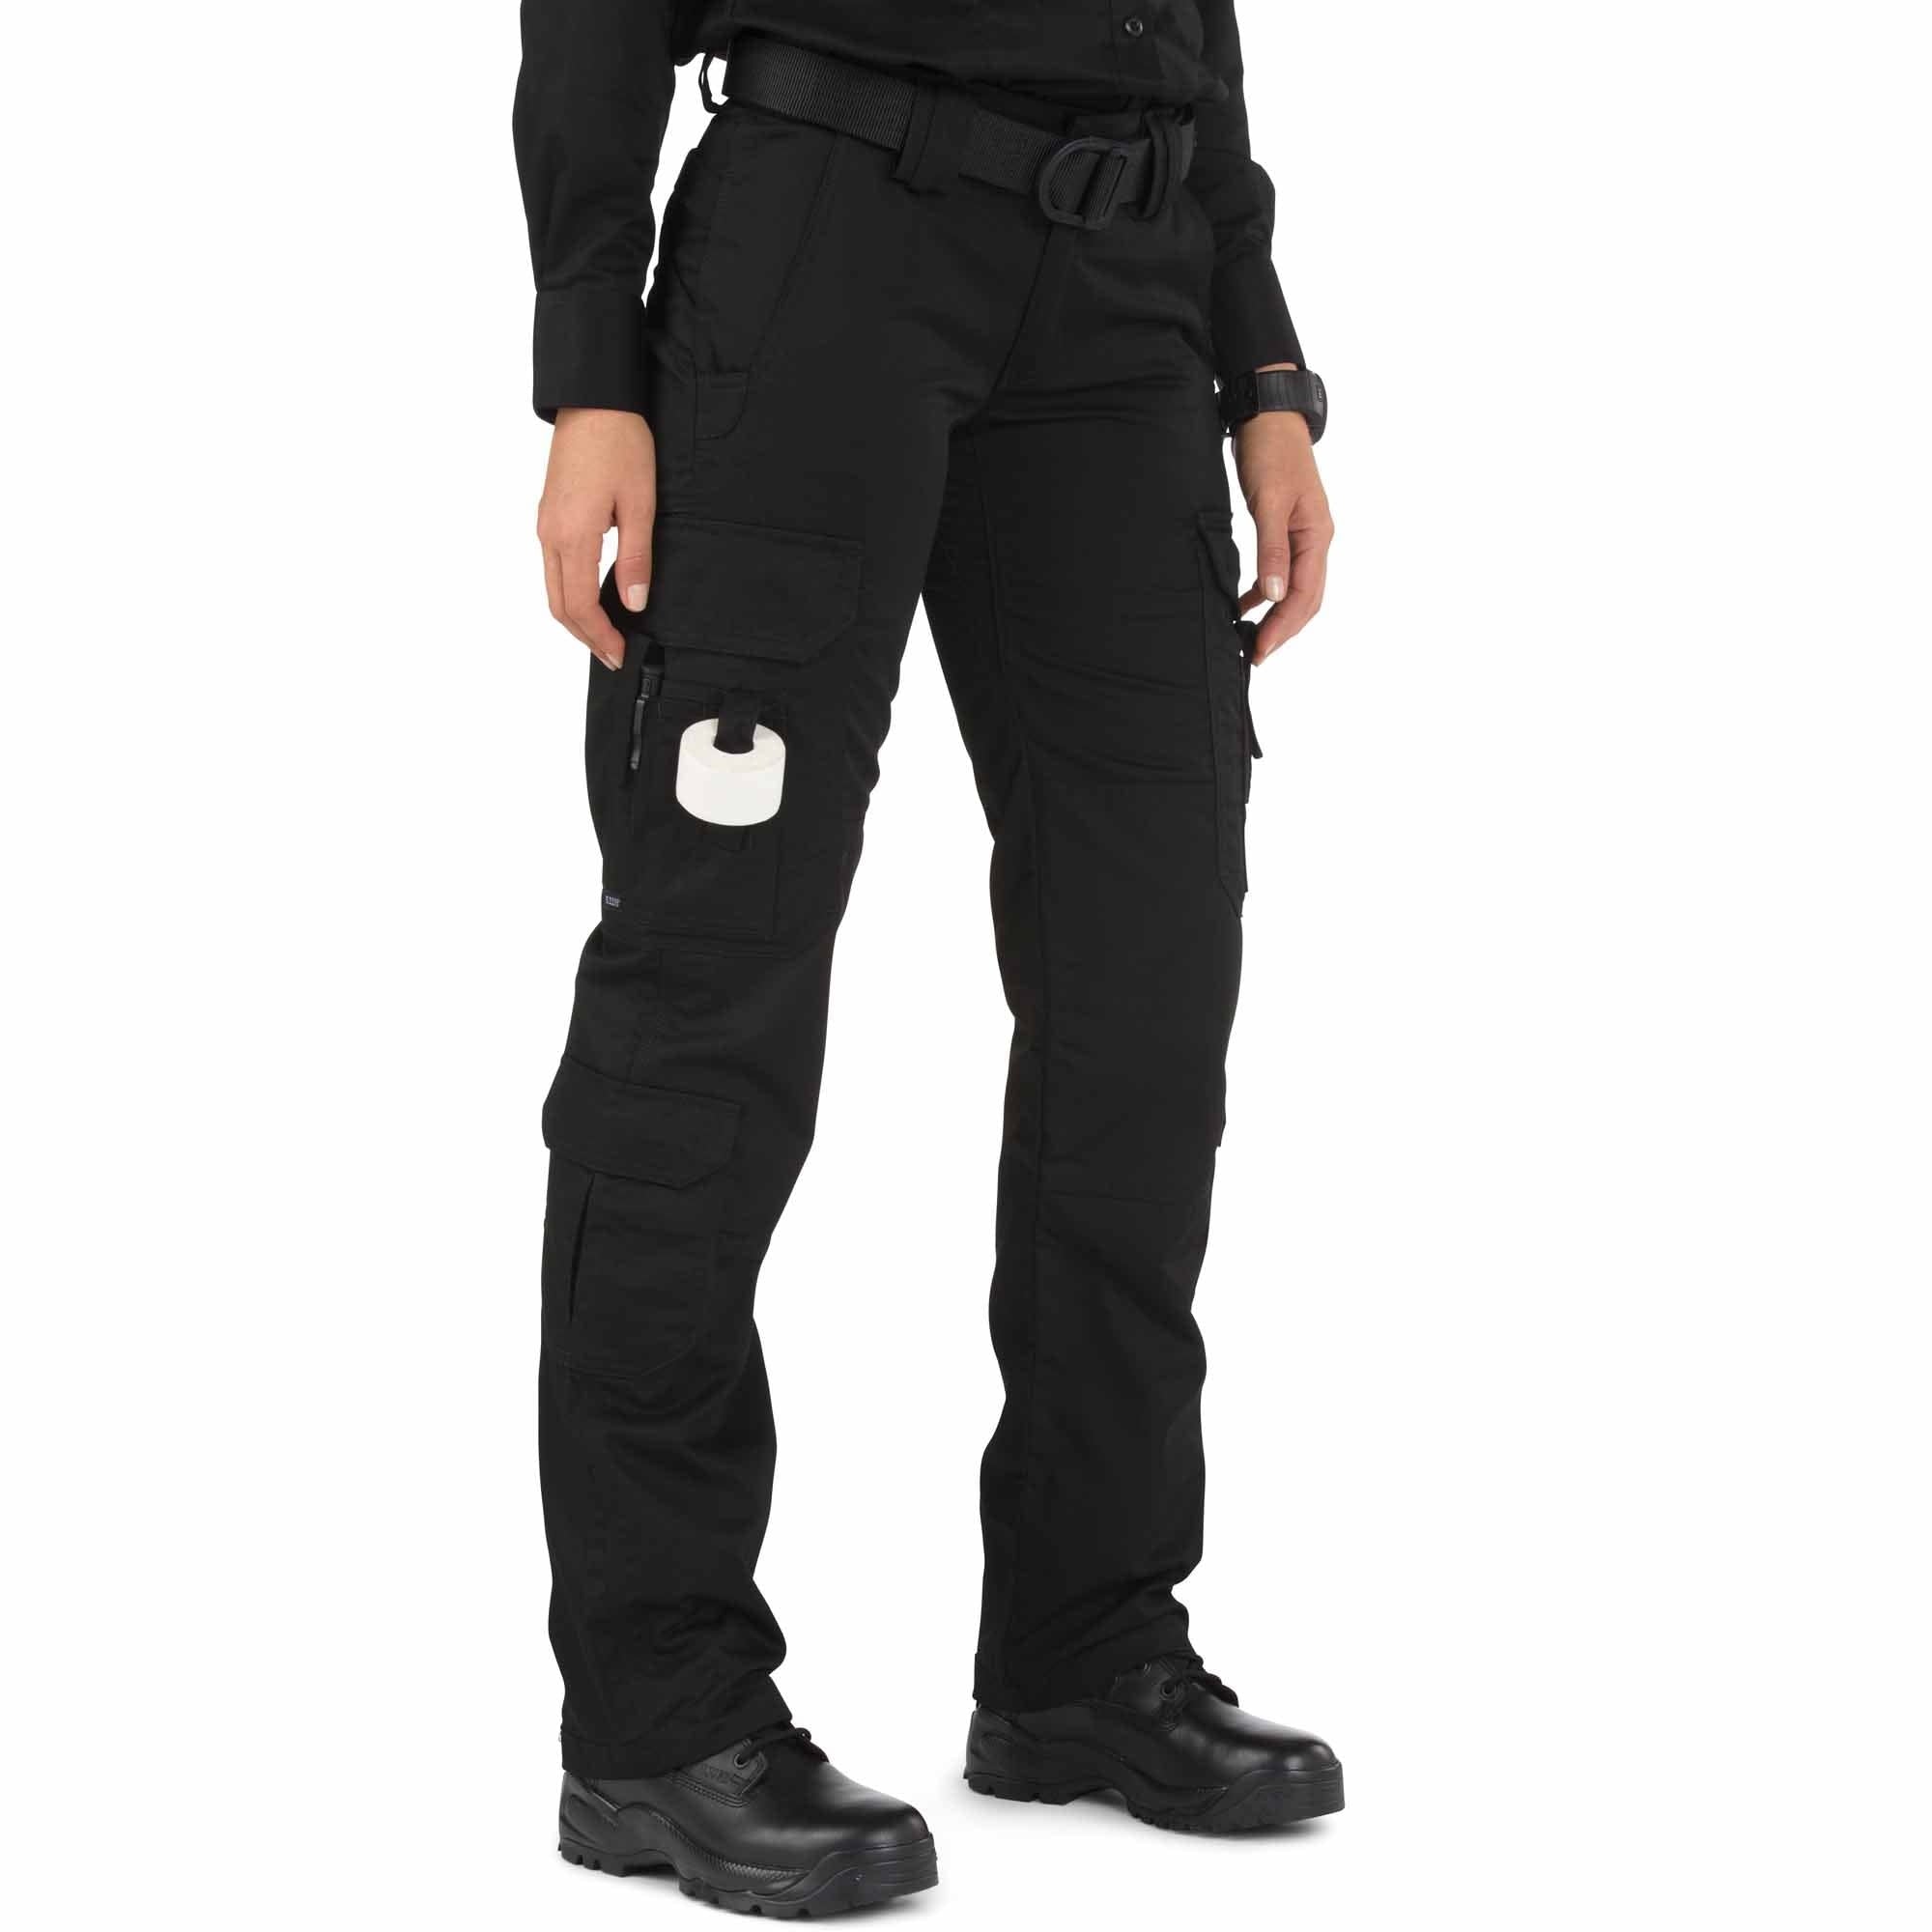 5.11 Women's Taclite EMS Pants Black